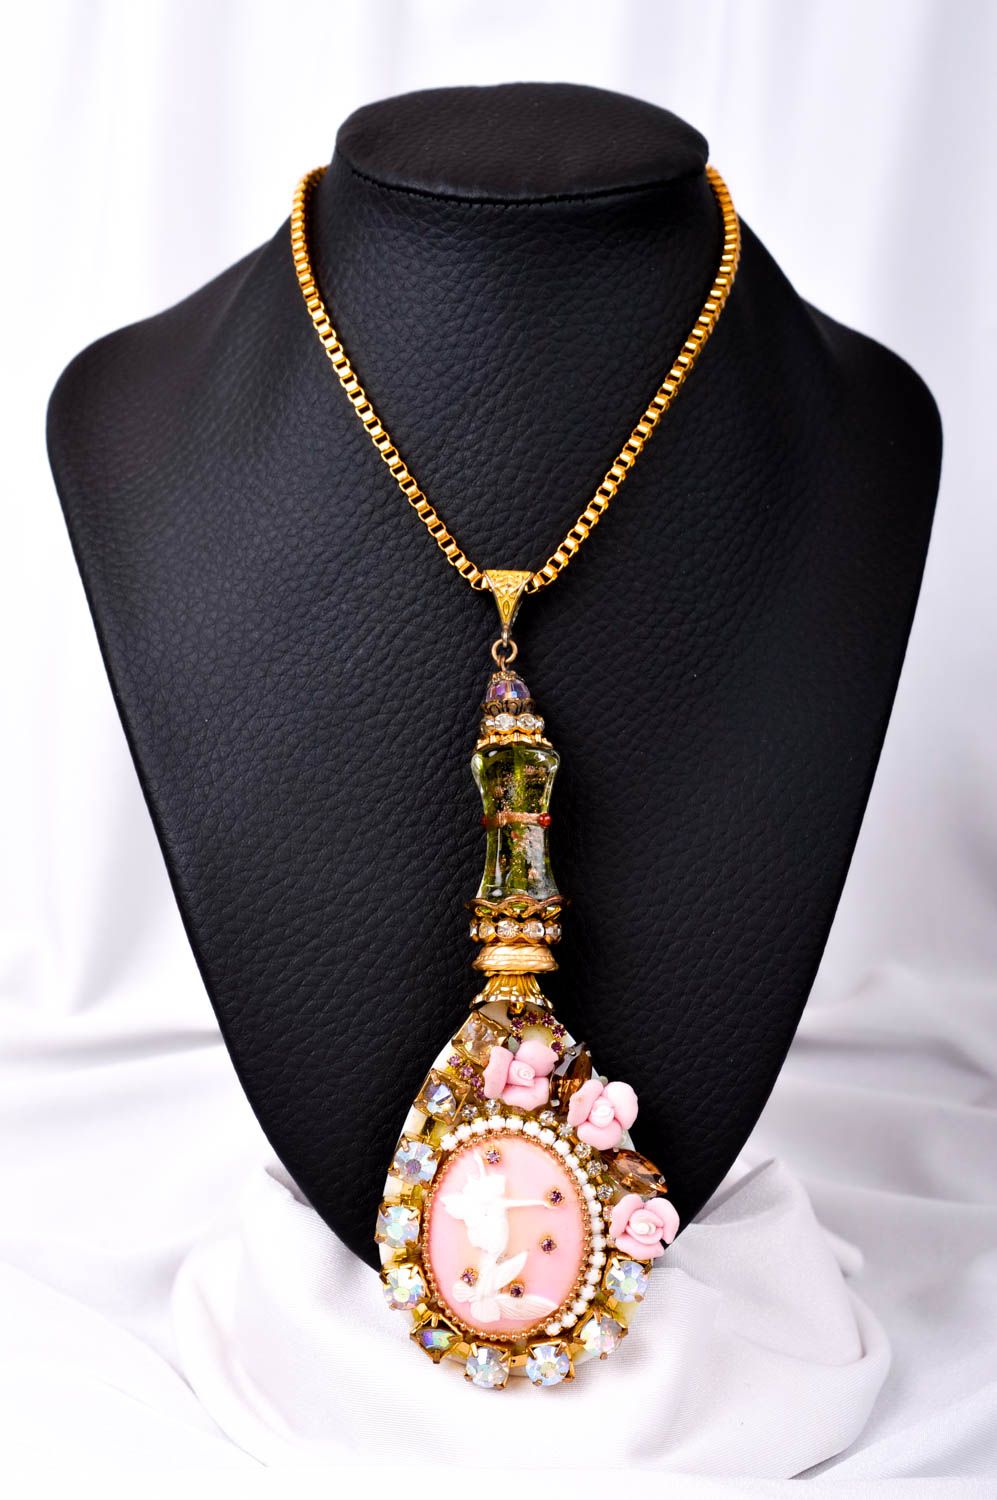 Handmade pendant unusual pendant for women designer accessory with stones photo 1